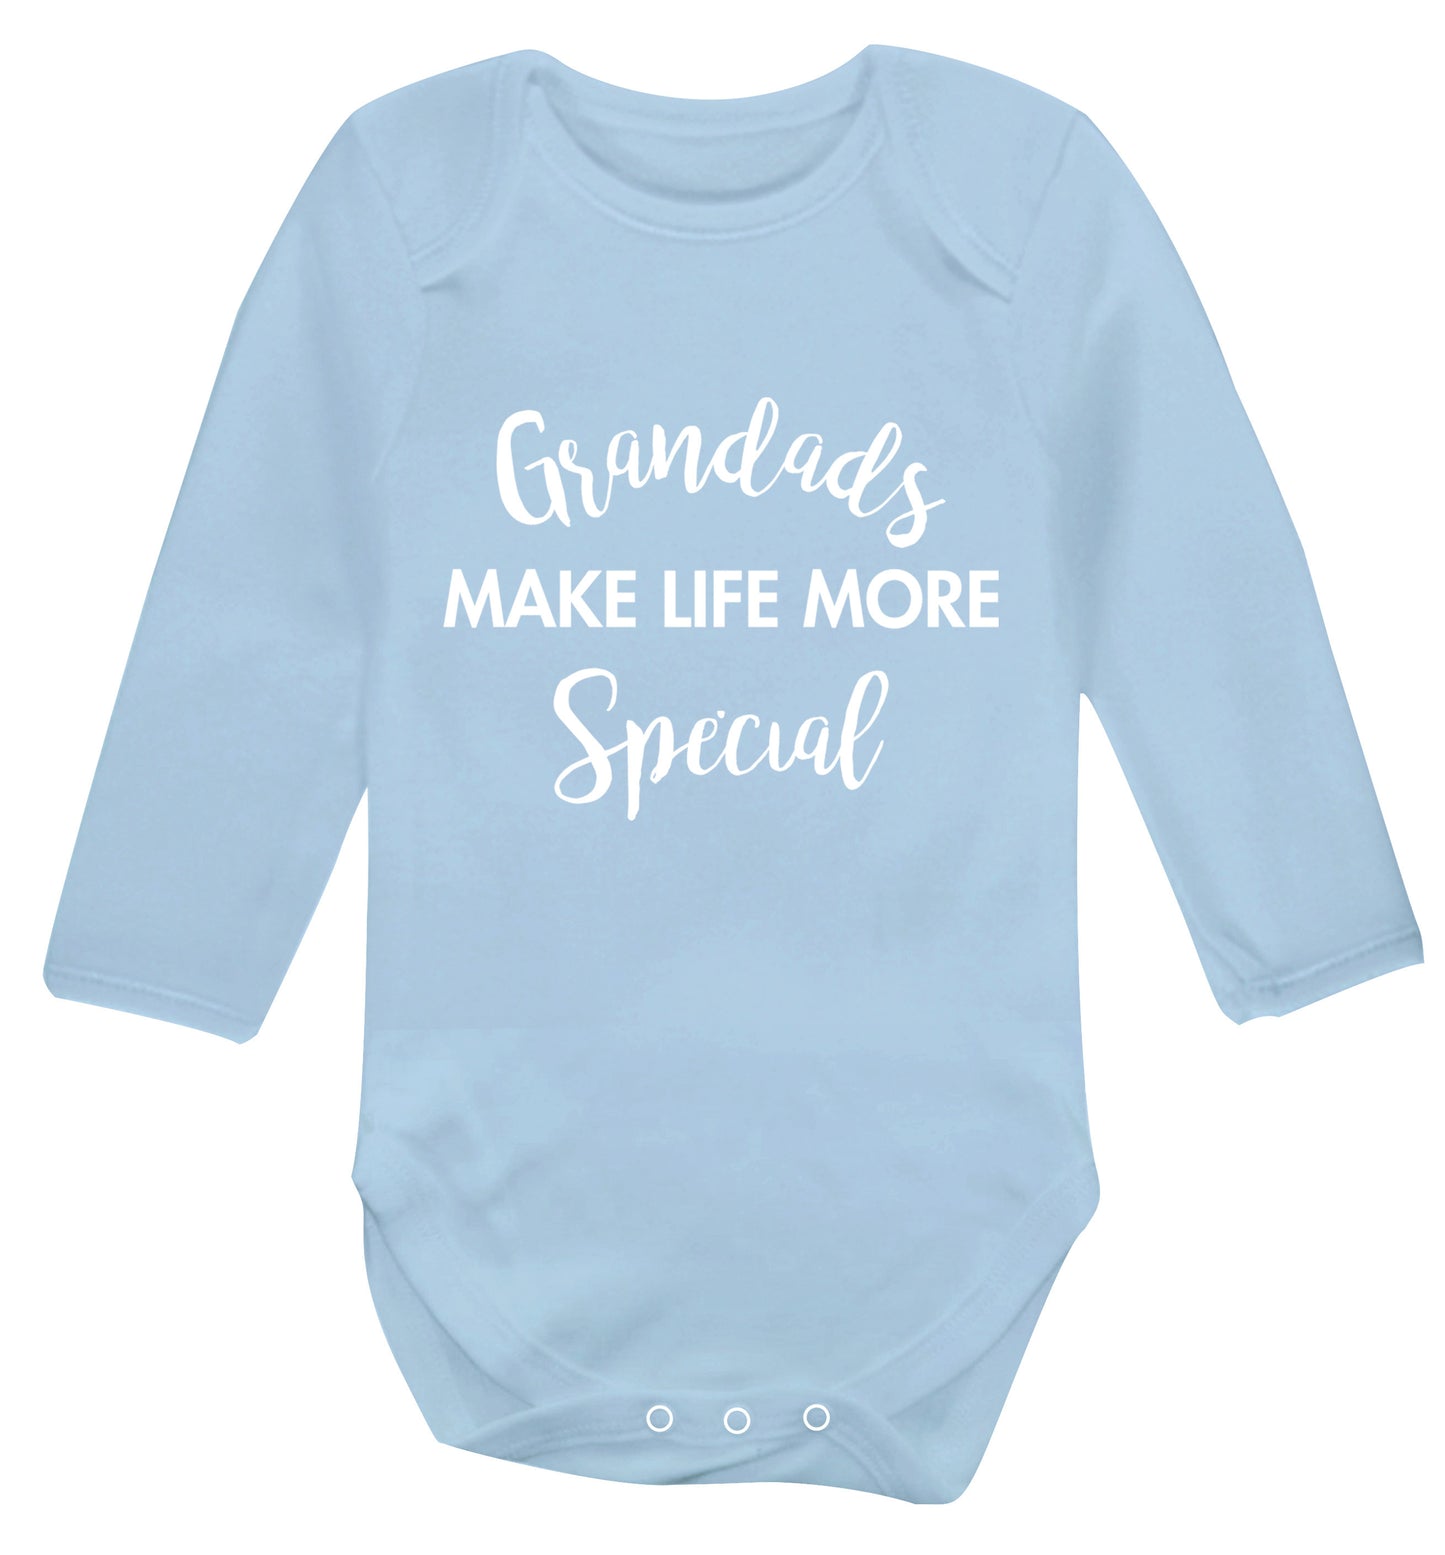 Grandads make life more special Baby Vest long sleeved pale blue 6-12 months